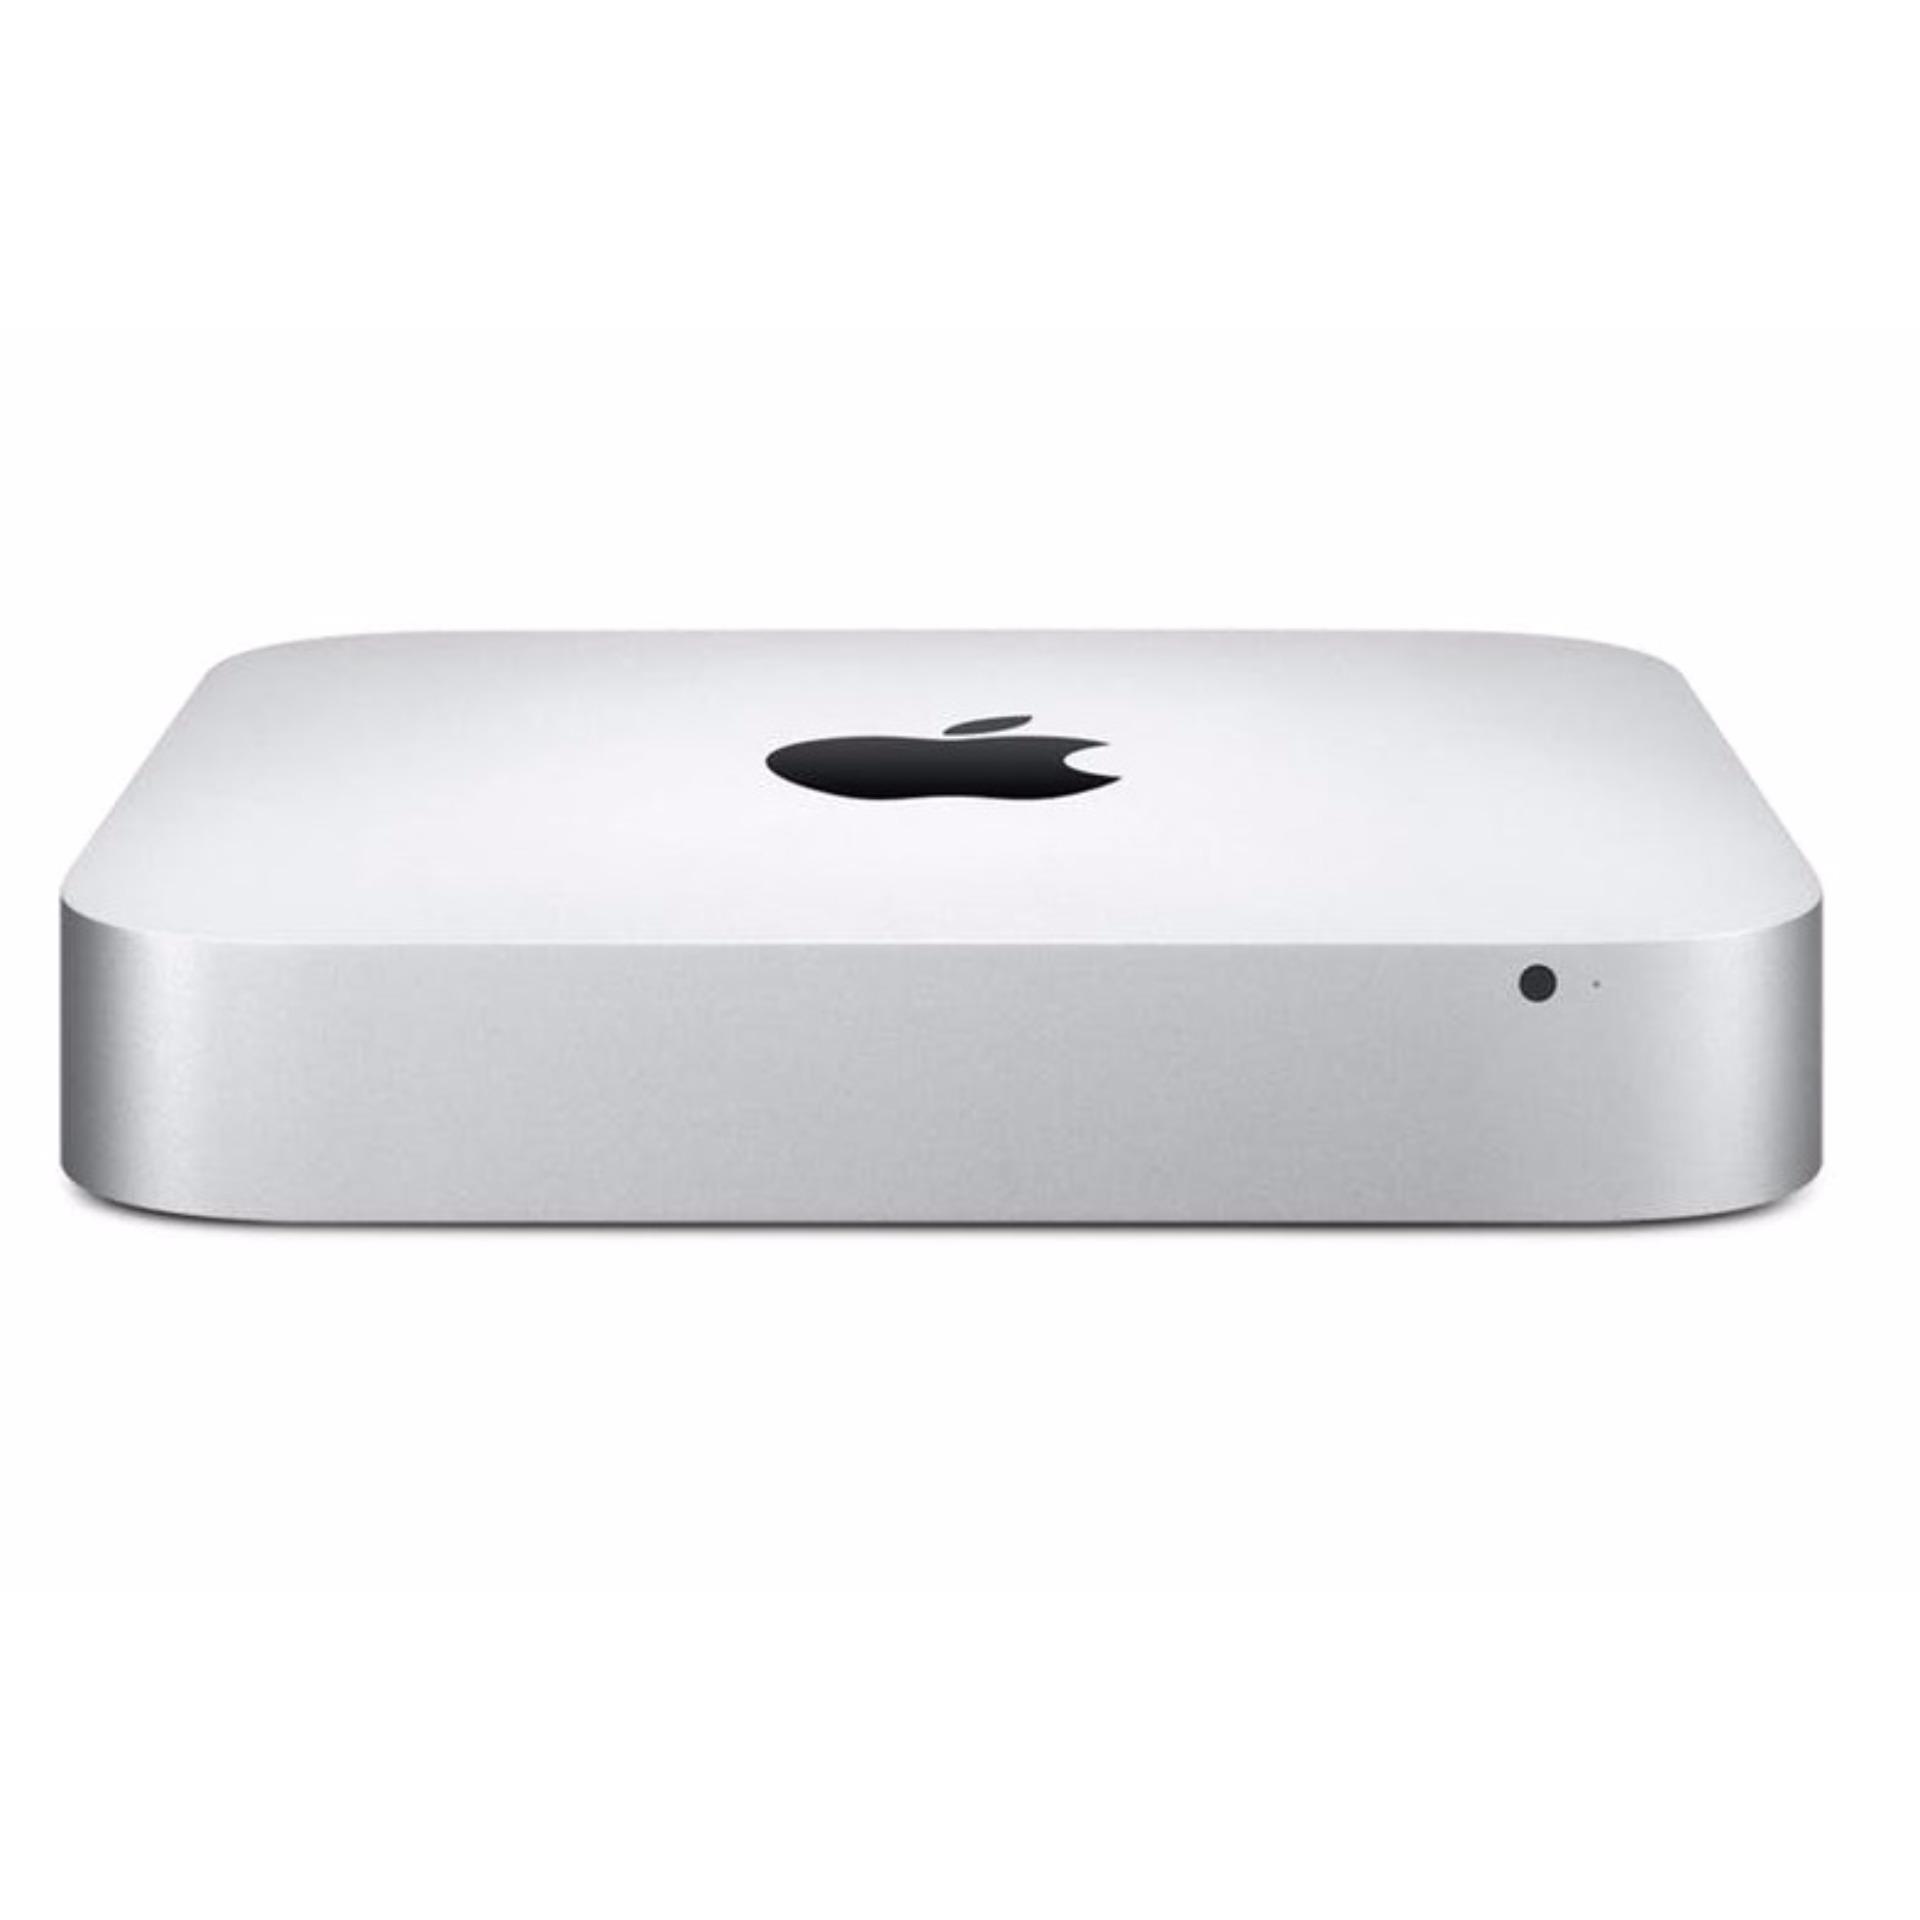 Apple Mac mini: 2.8GHz dual-core Intel Core i5